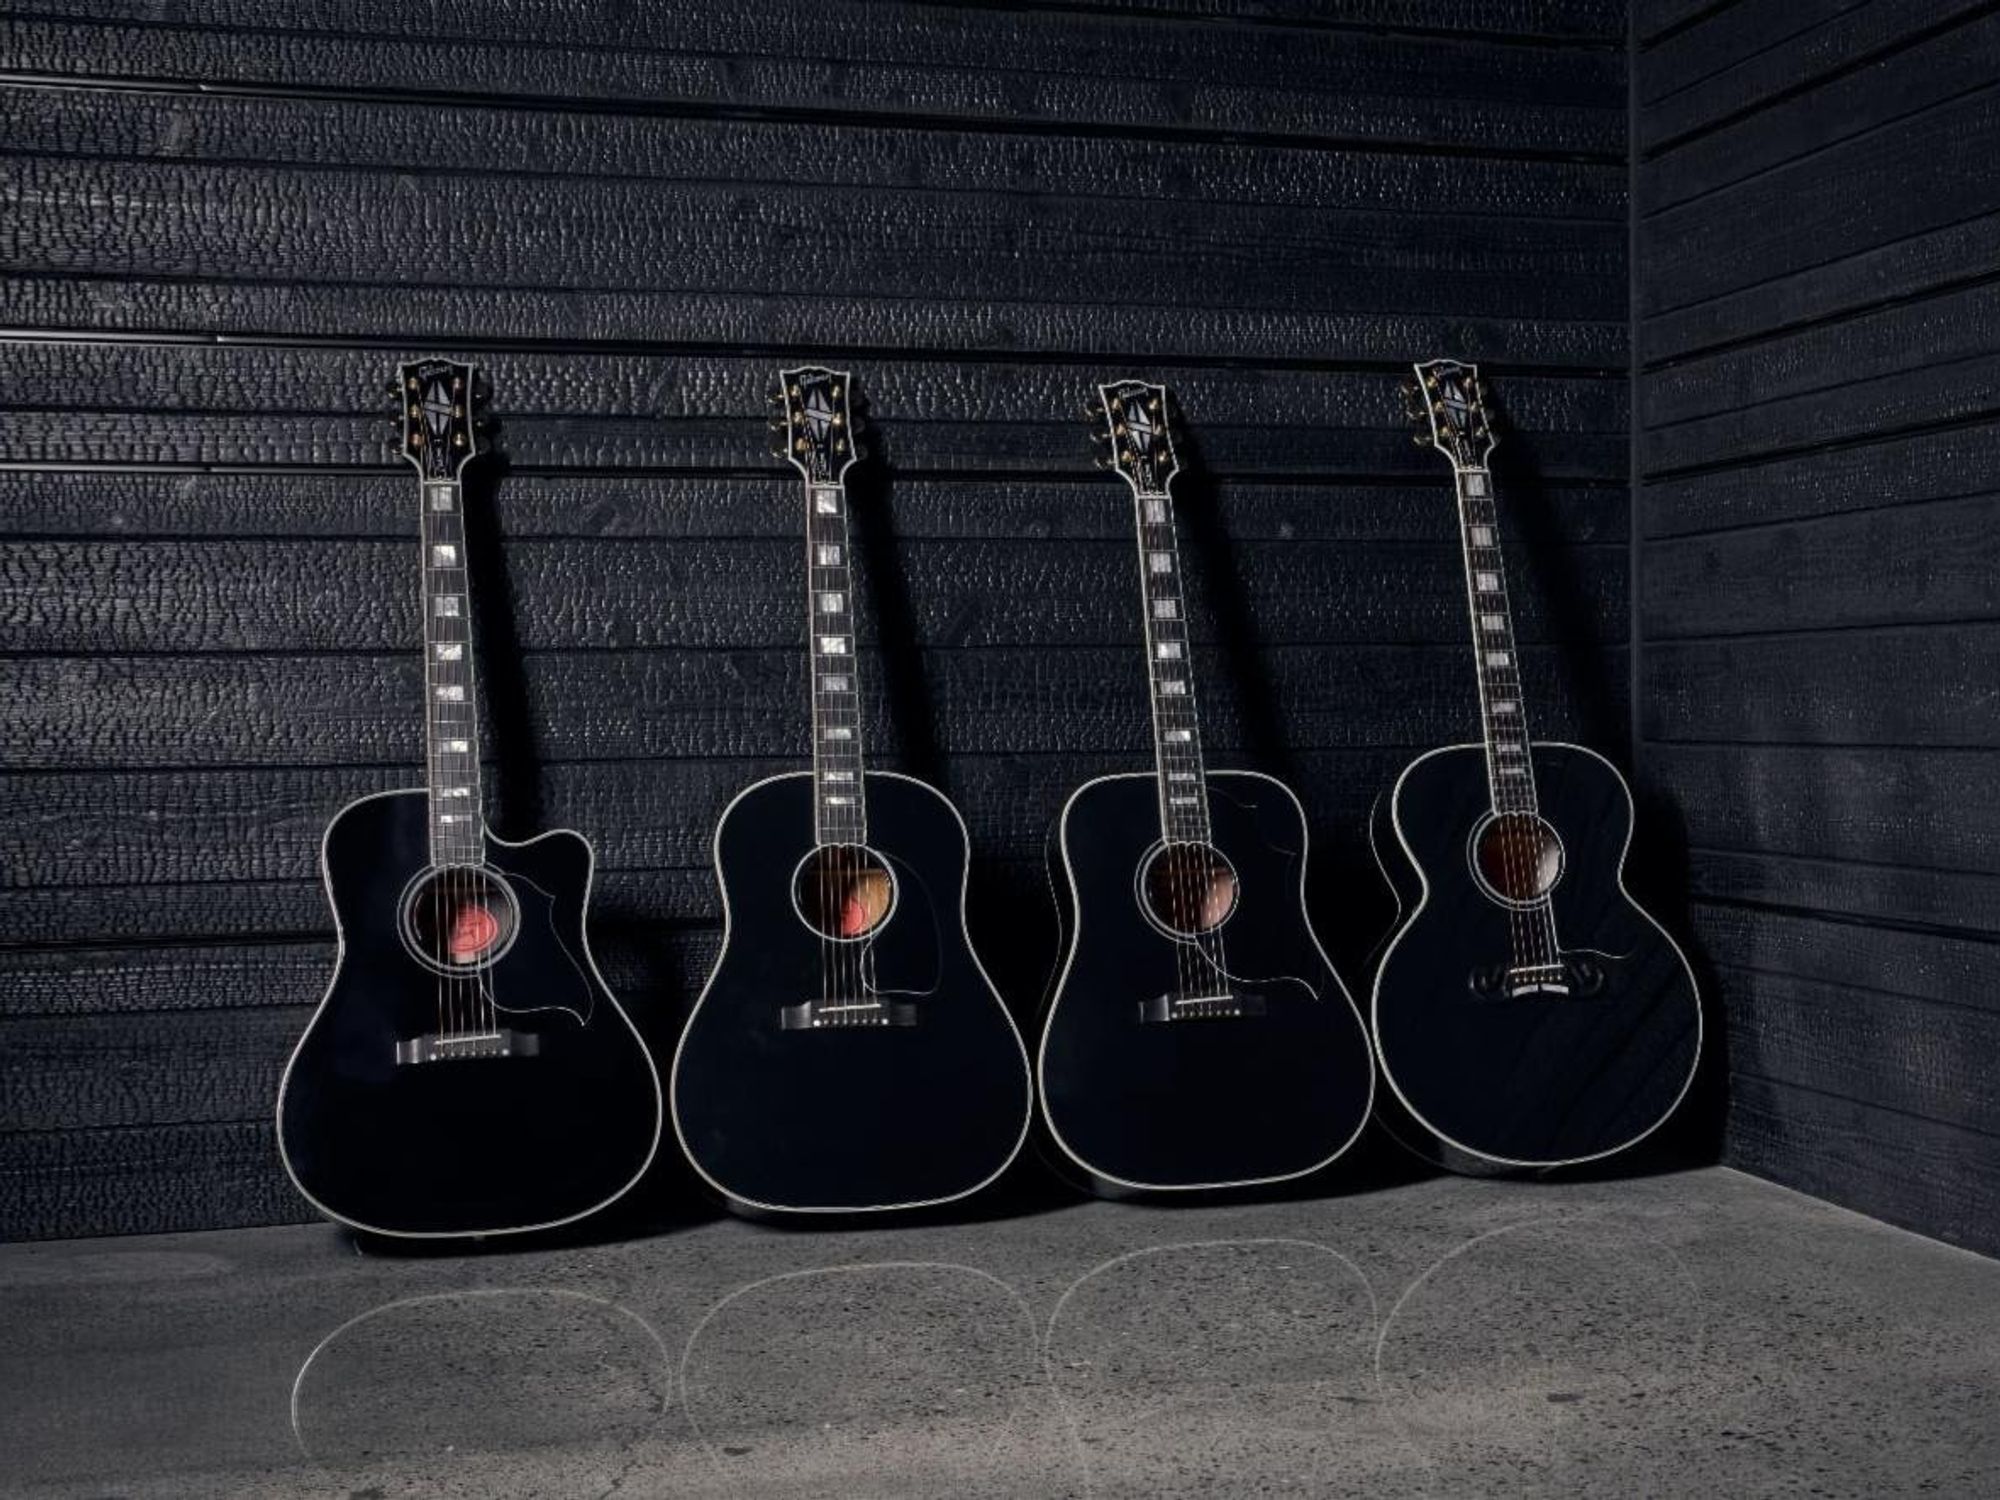 Gibson Acoustic Custom guitars